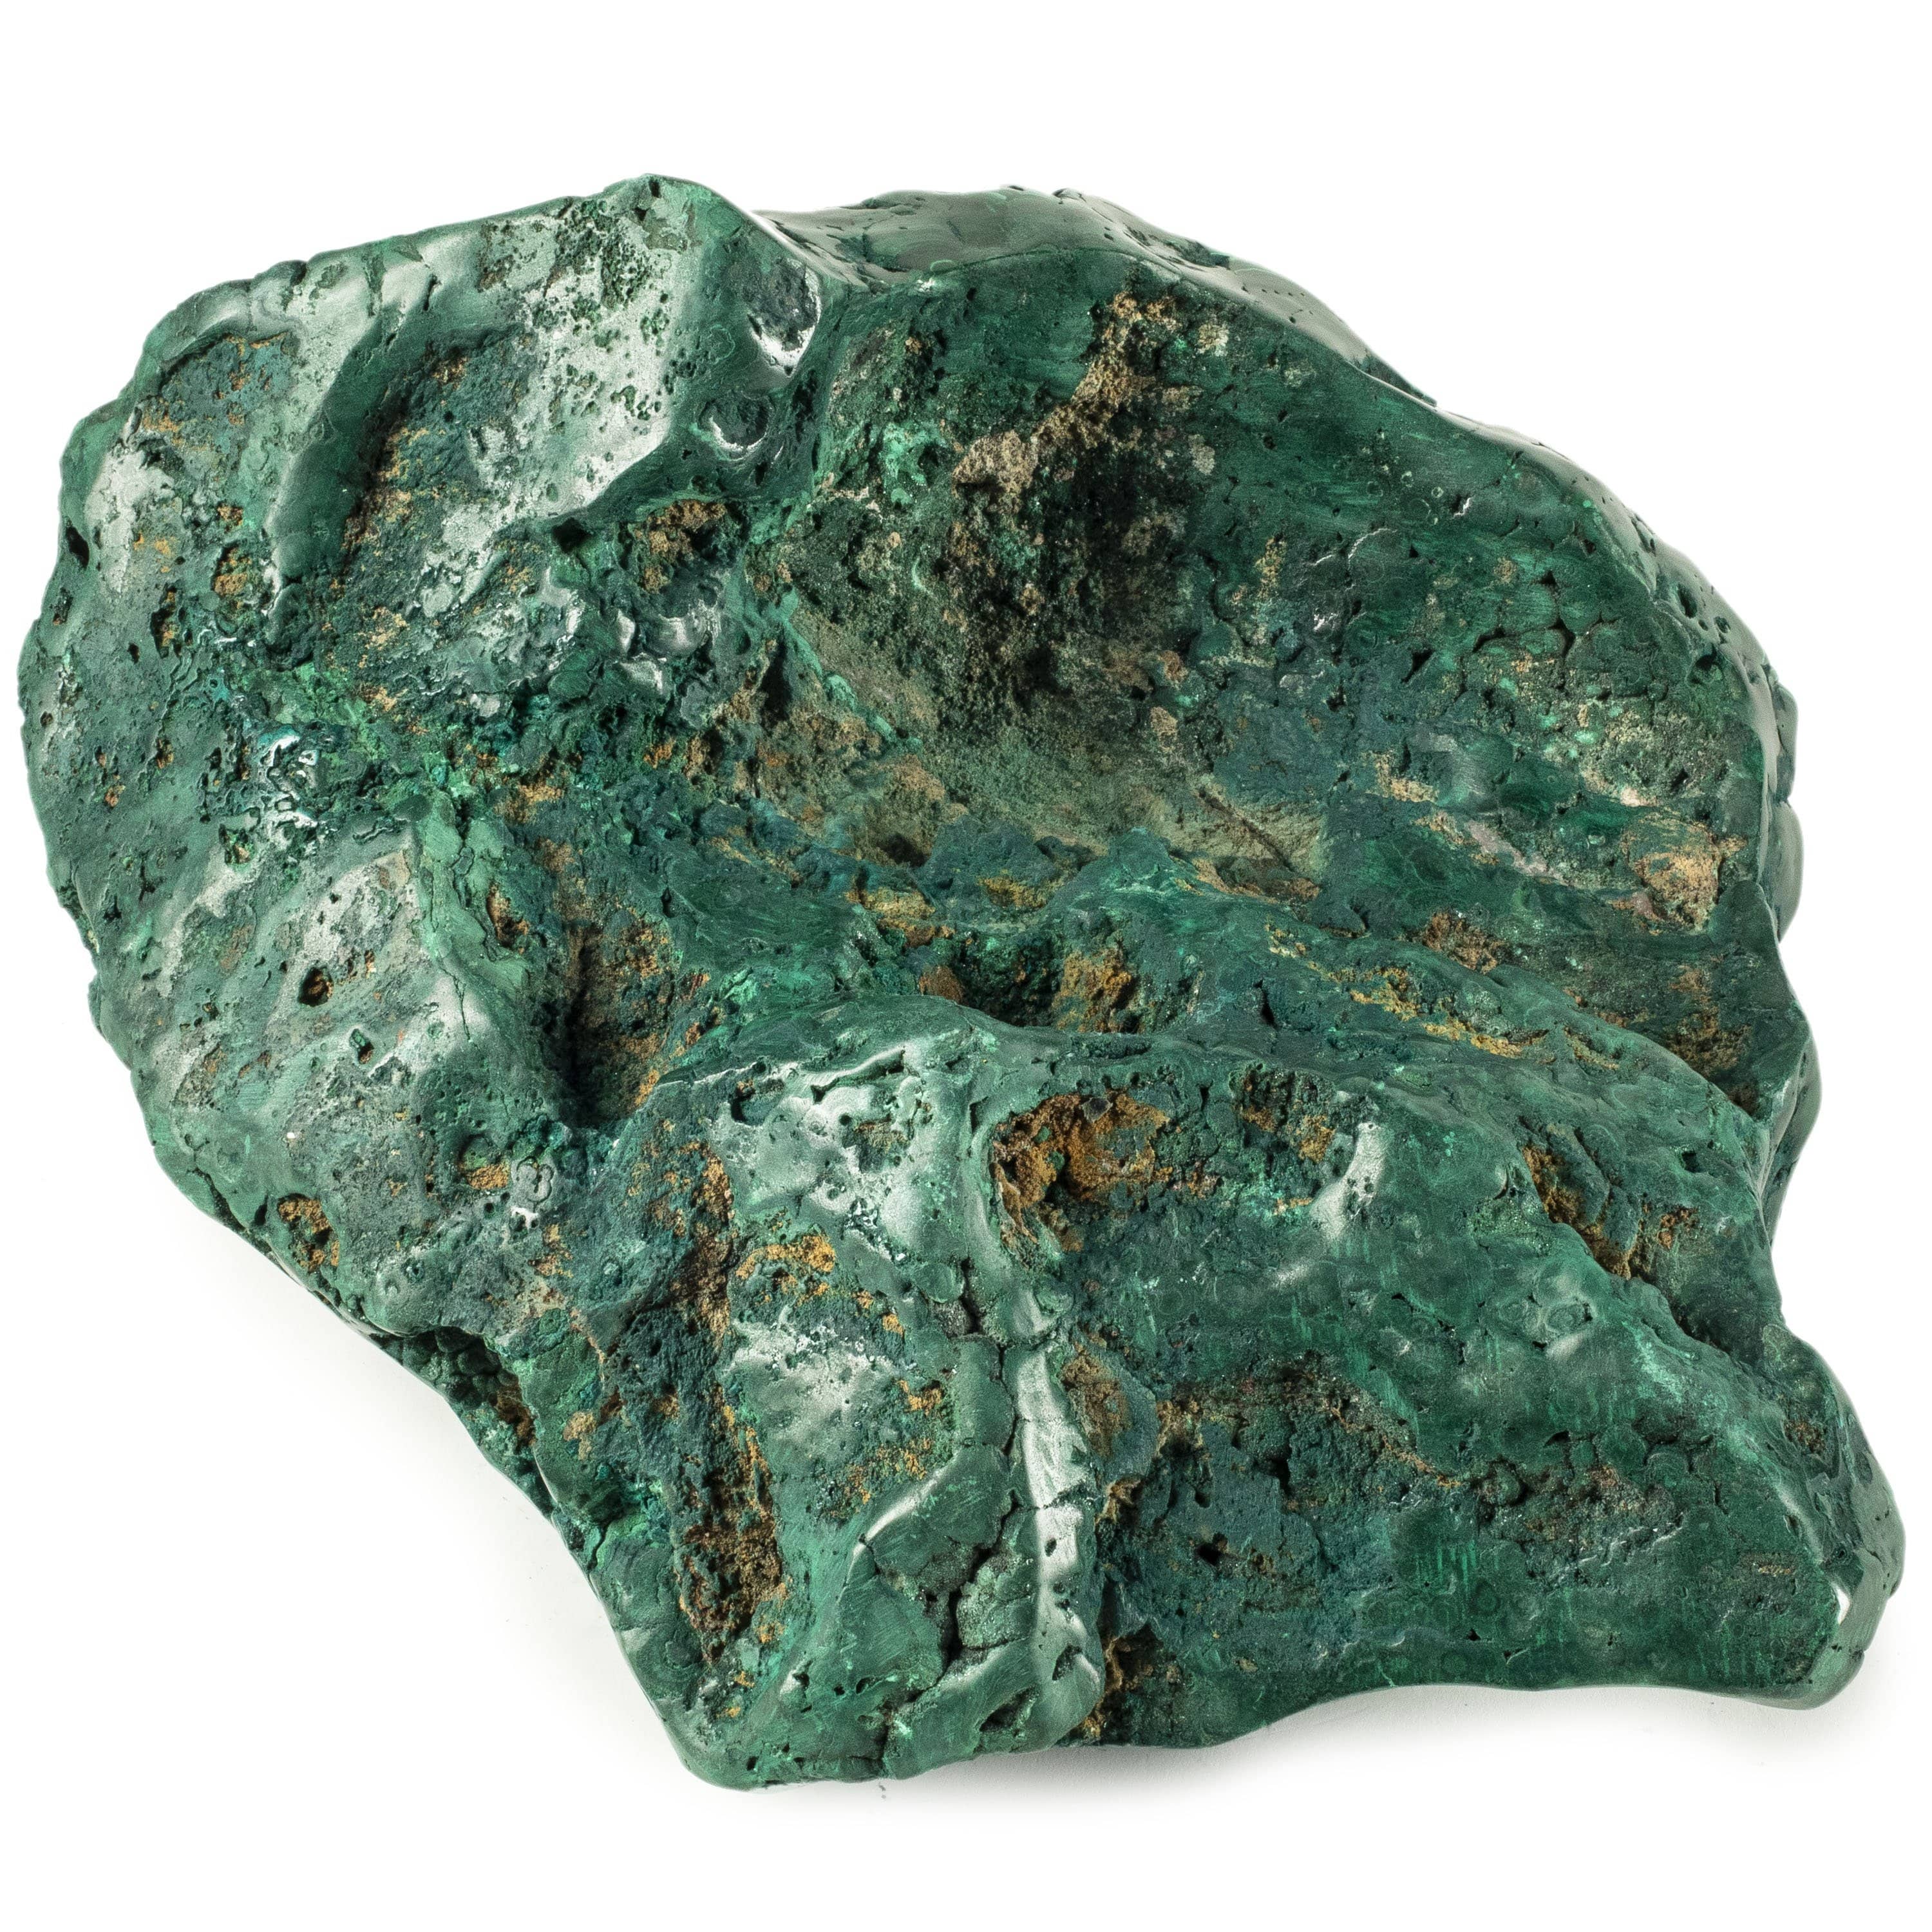 Kalifano Malachite Rare Natural Green Malachite Polished Freeform Specimen from Congo - 15.5 kg / 34.1 lbs MA10000.001